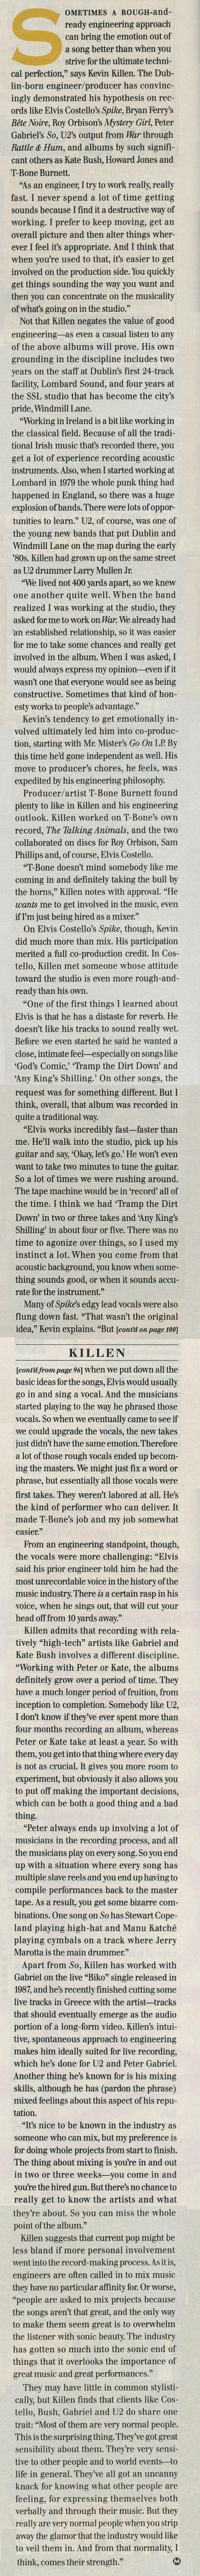 1989-11-00 Musician Killen interview composite.jpg